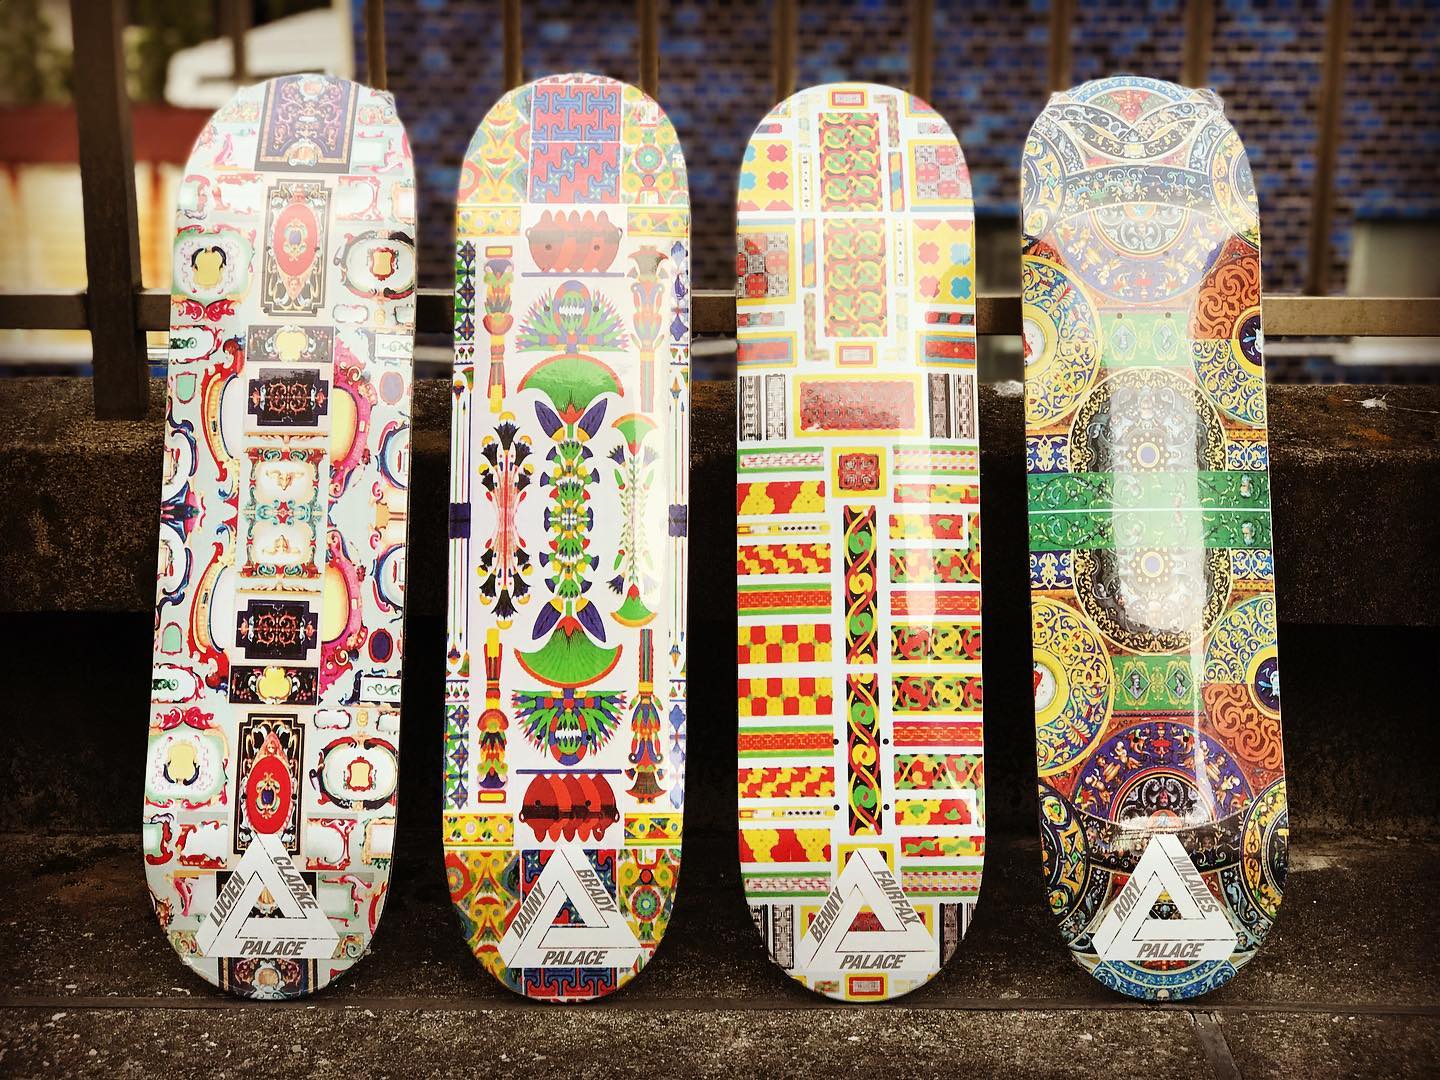 ・New @palaceskateboards decks.